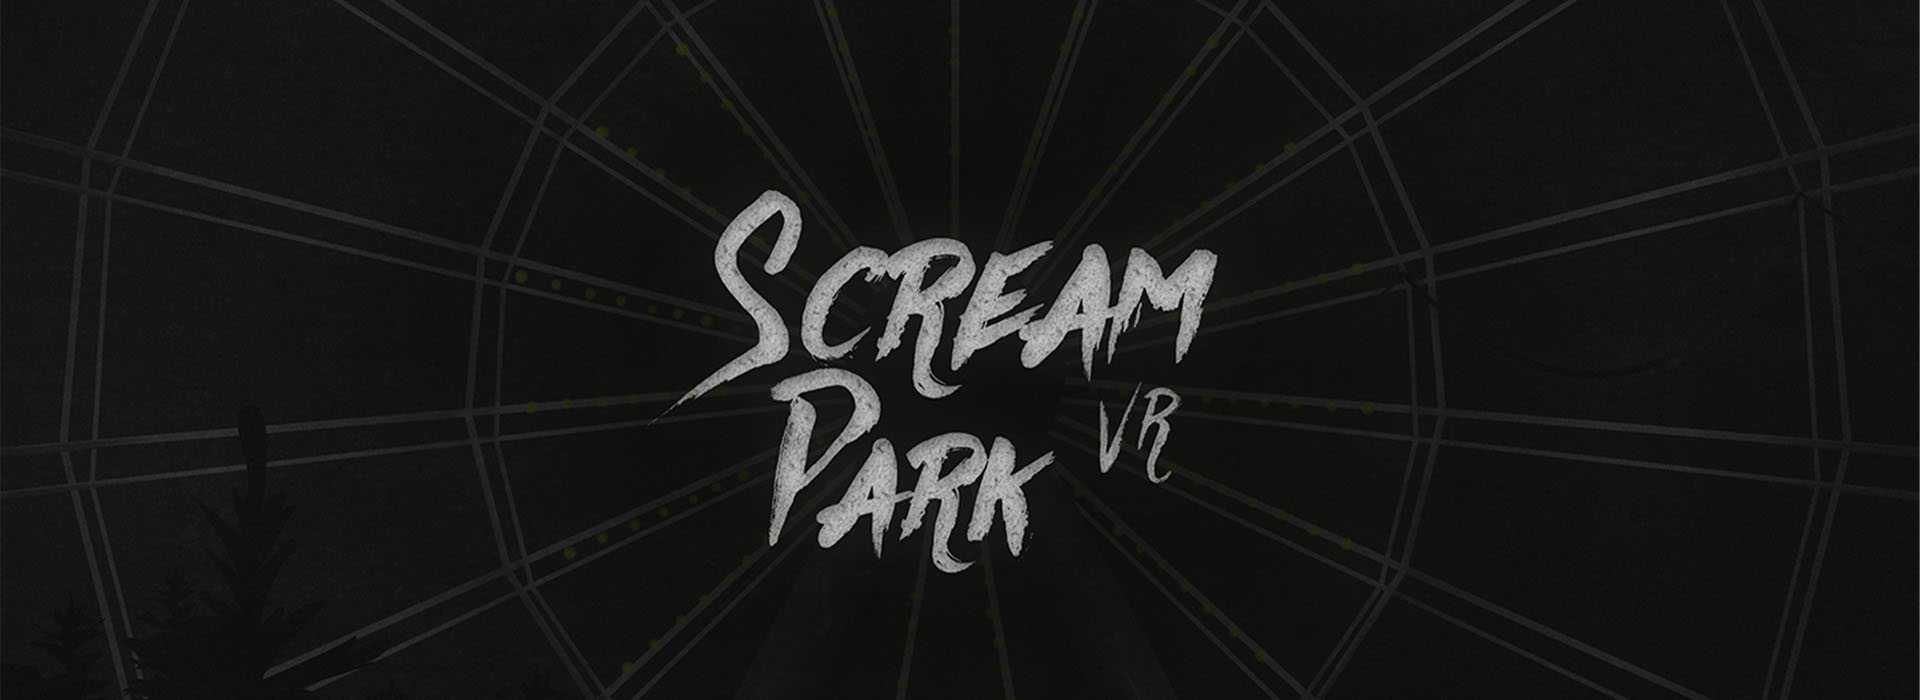 Project Screampark VR